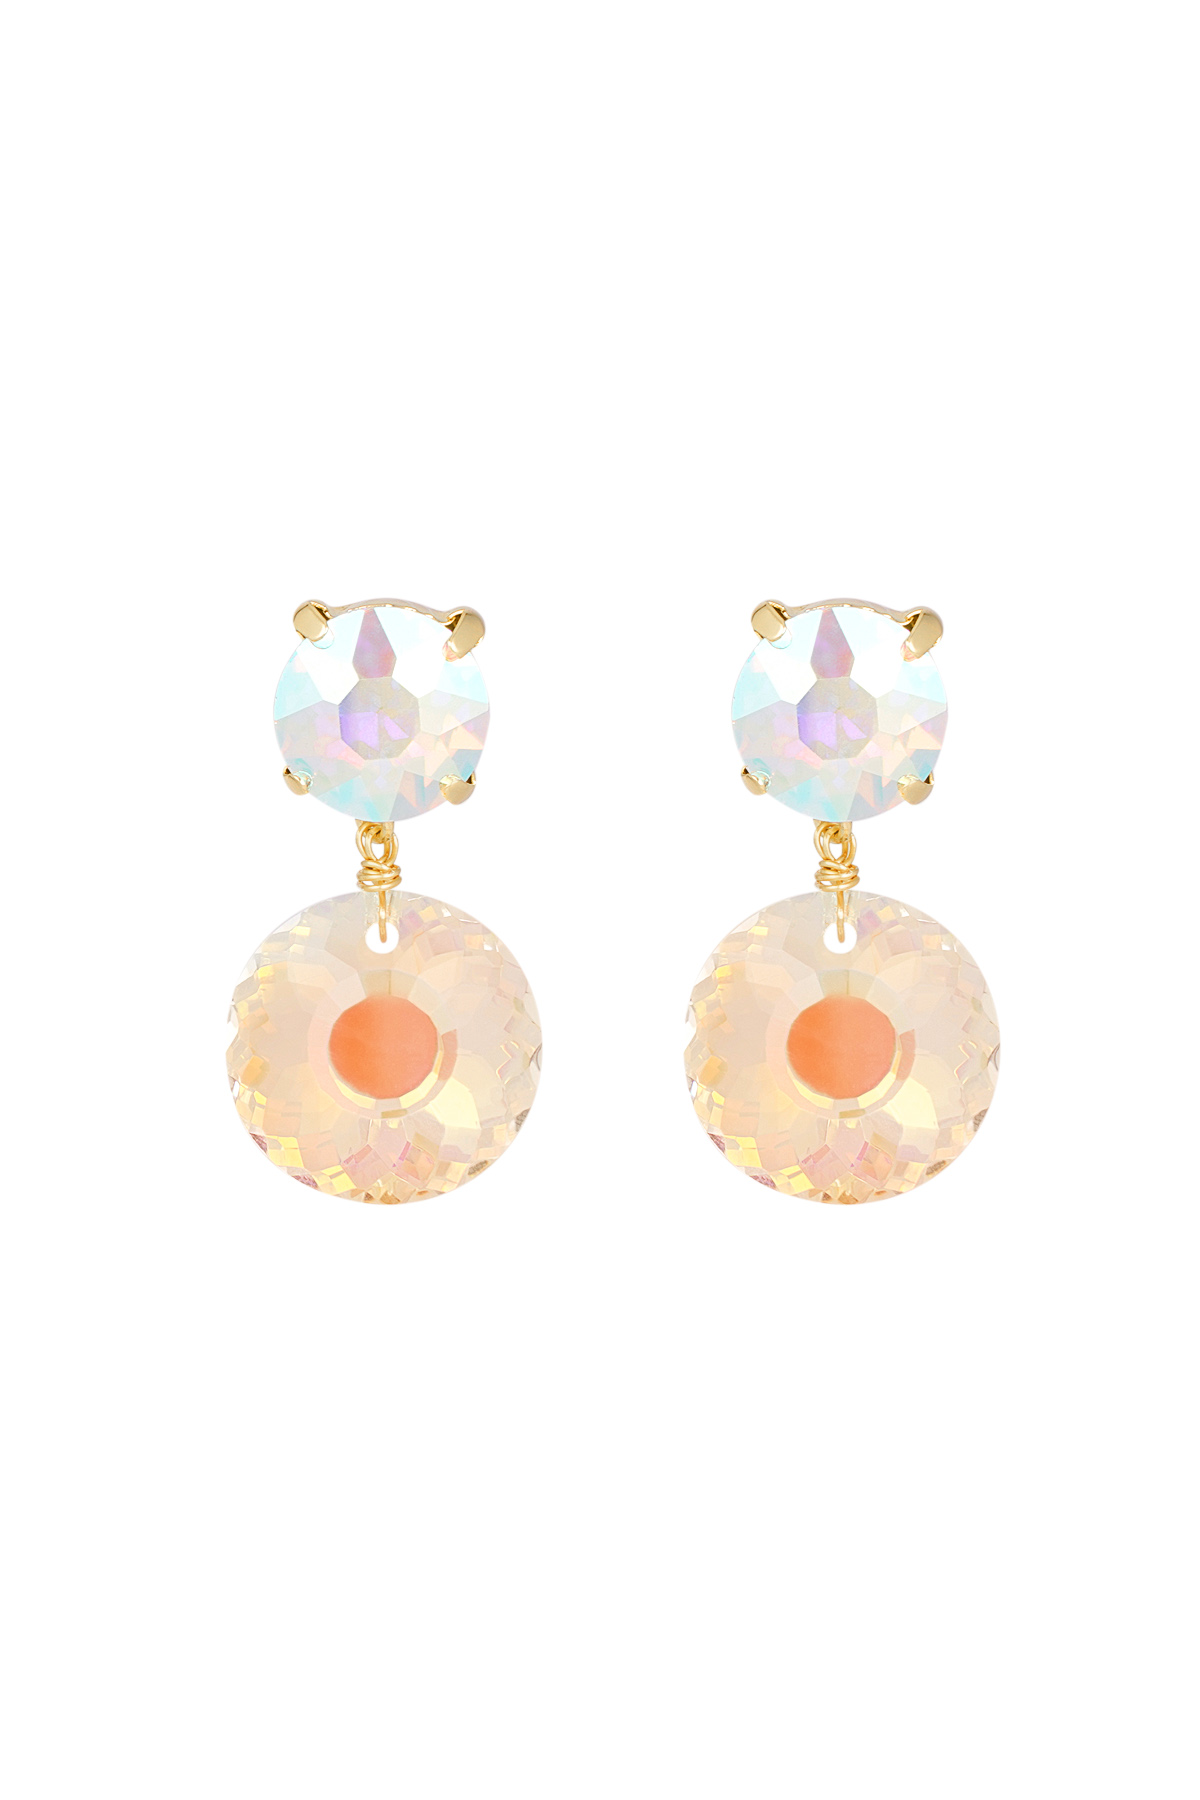 Double diamond earrings - white gold 